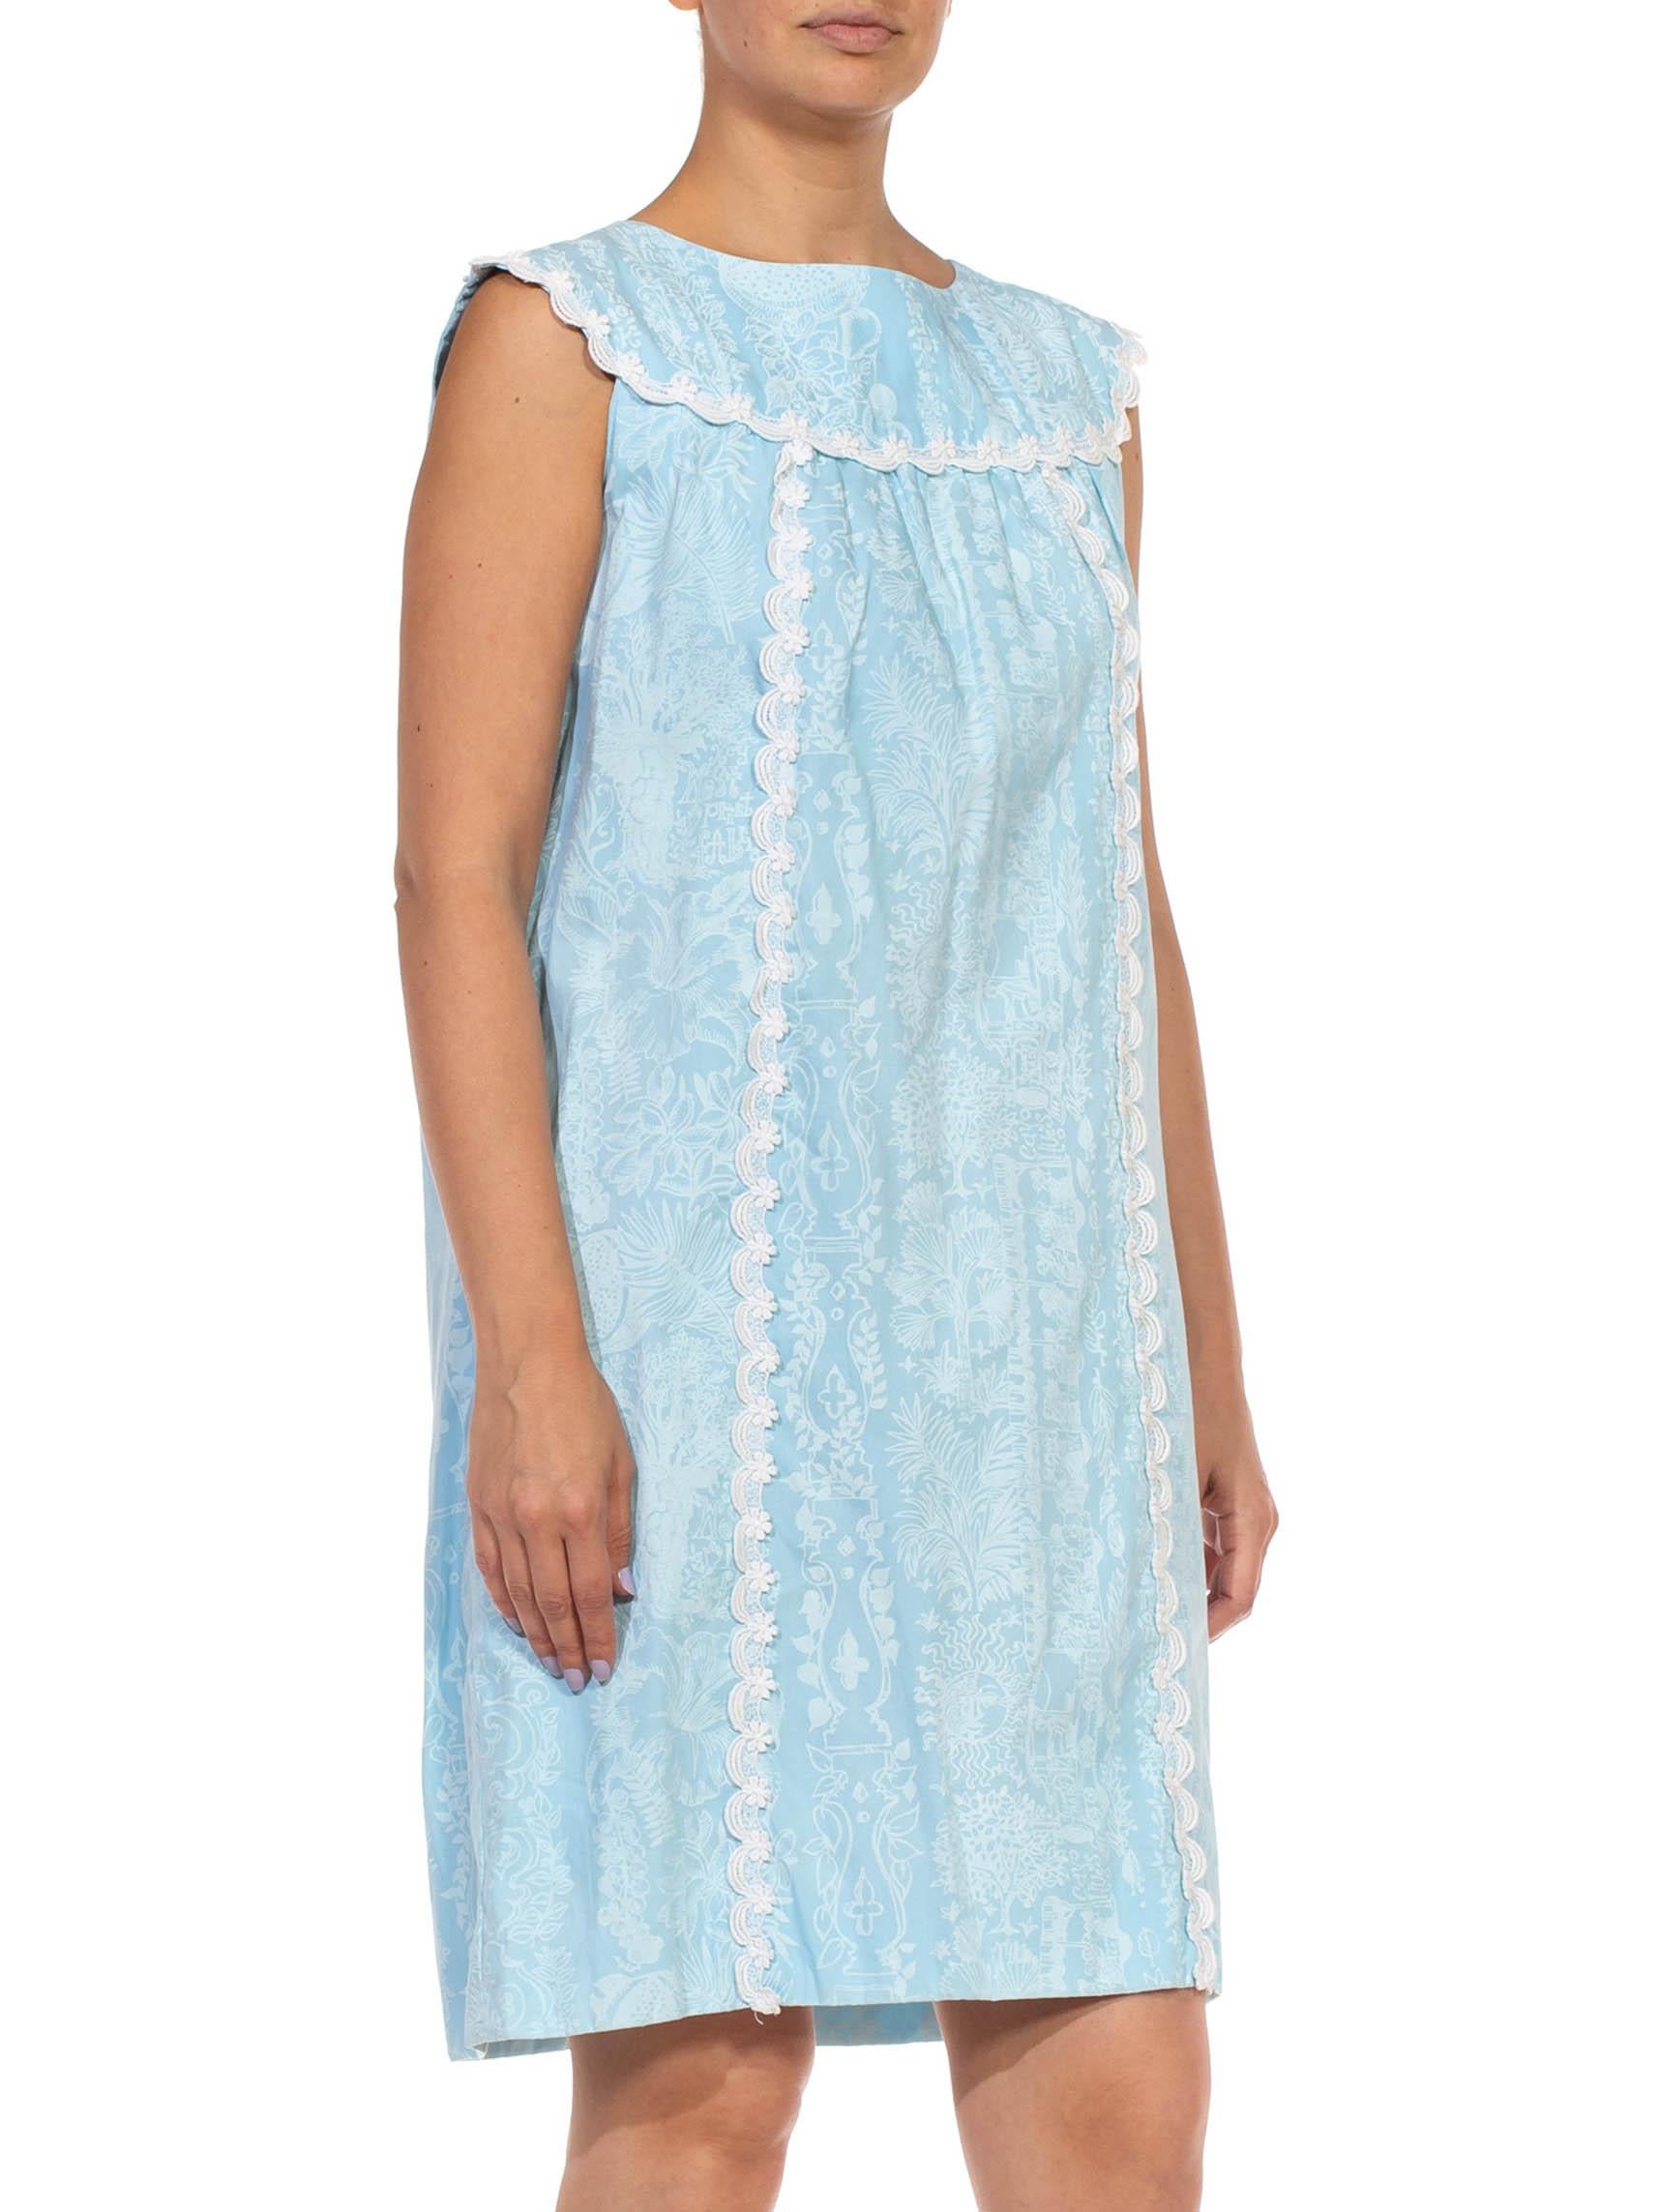 blue white dress